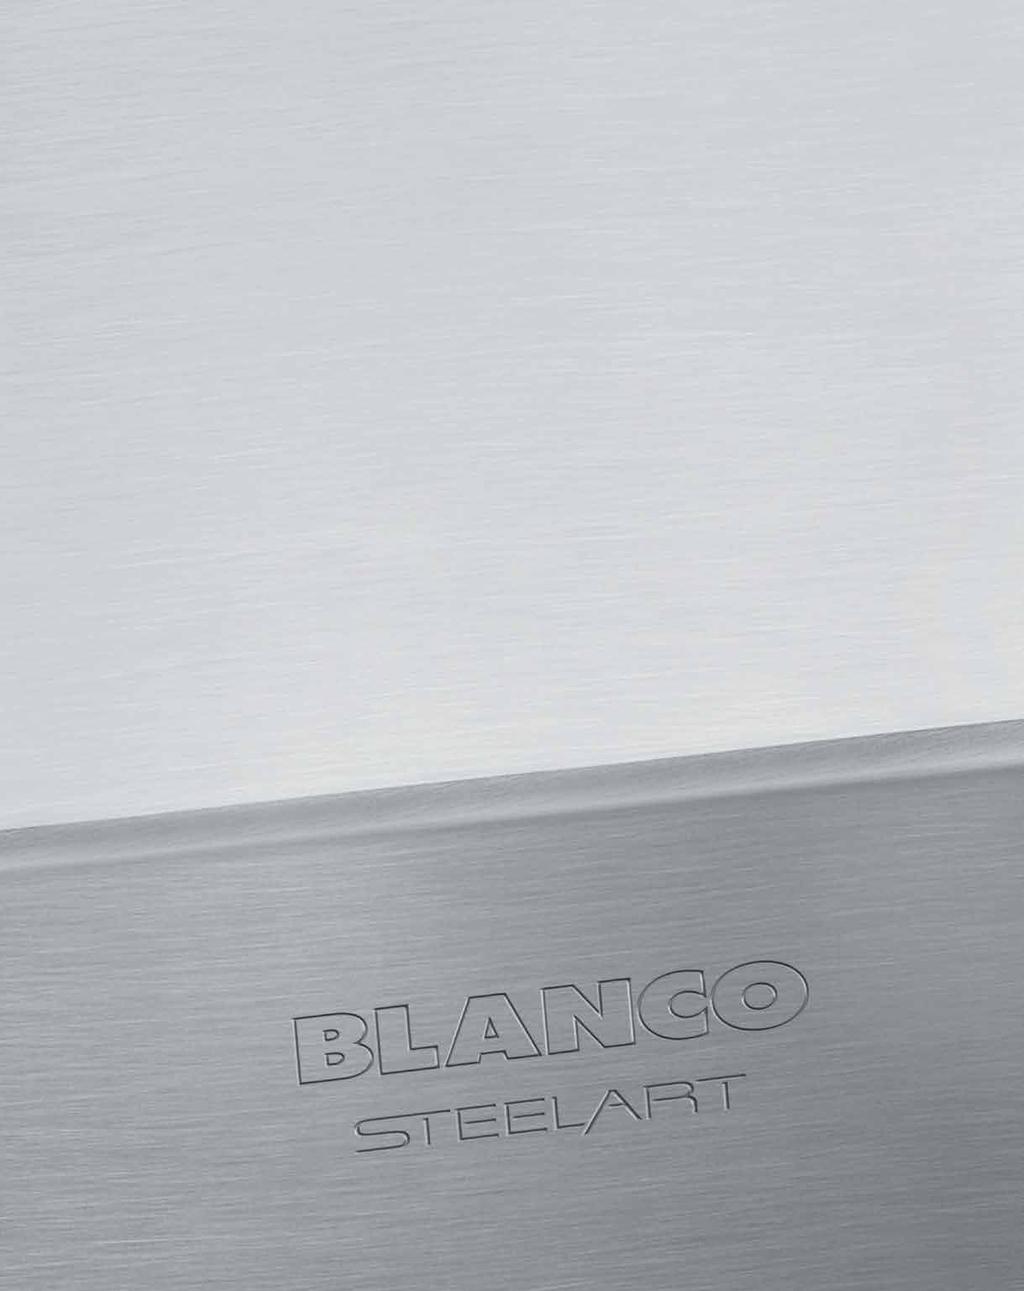 BLANCO STEELART Handcrafted in Germany Flawless